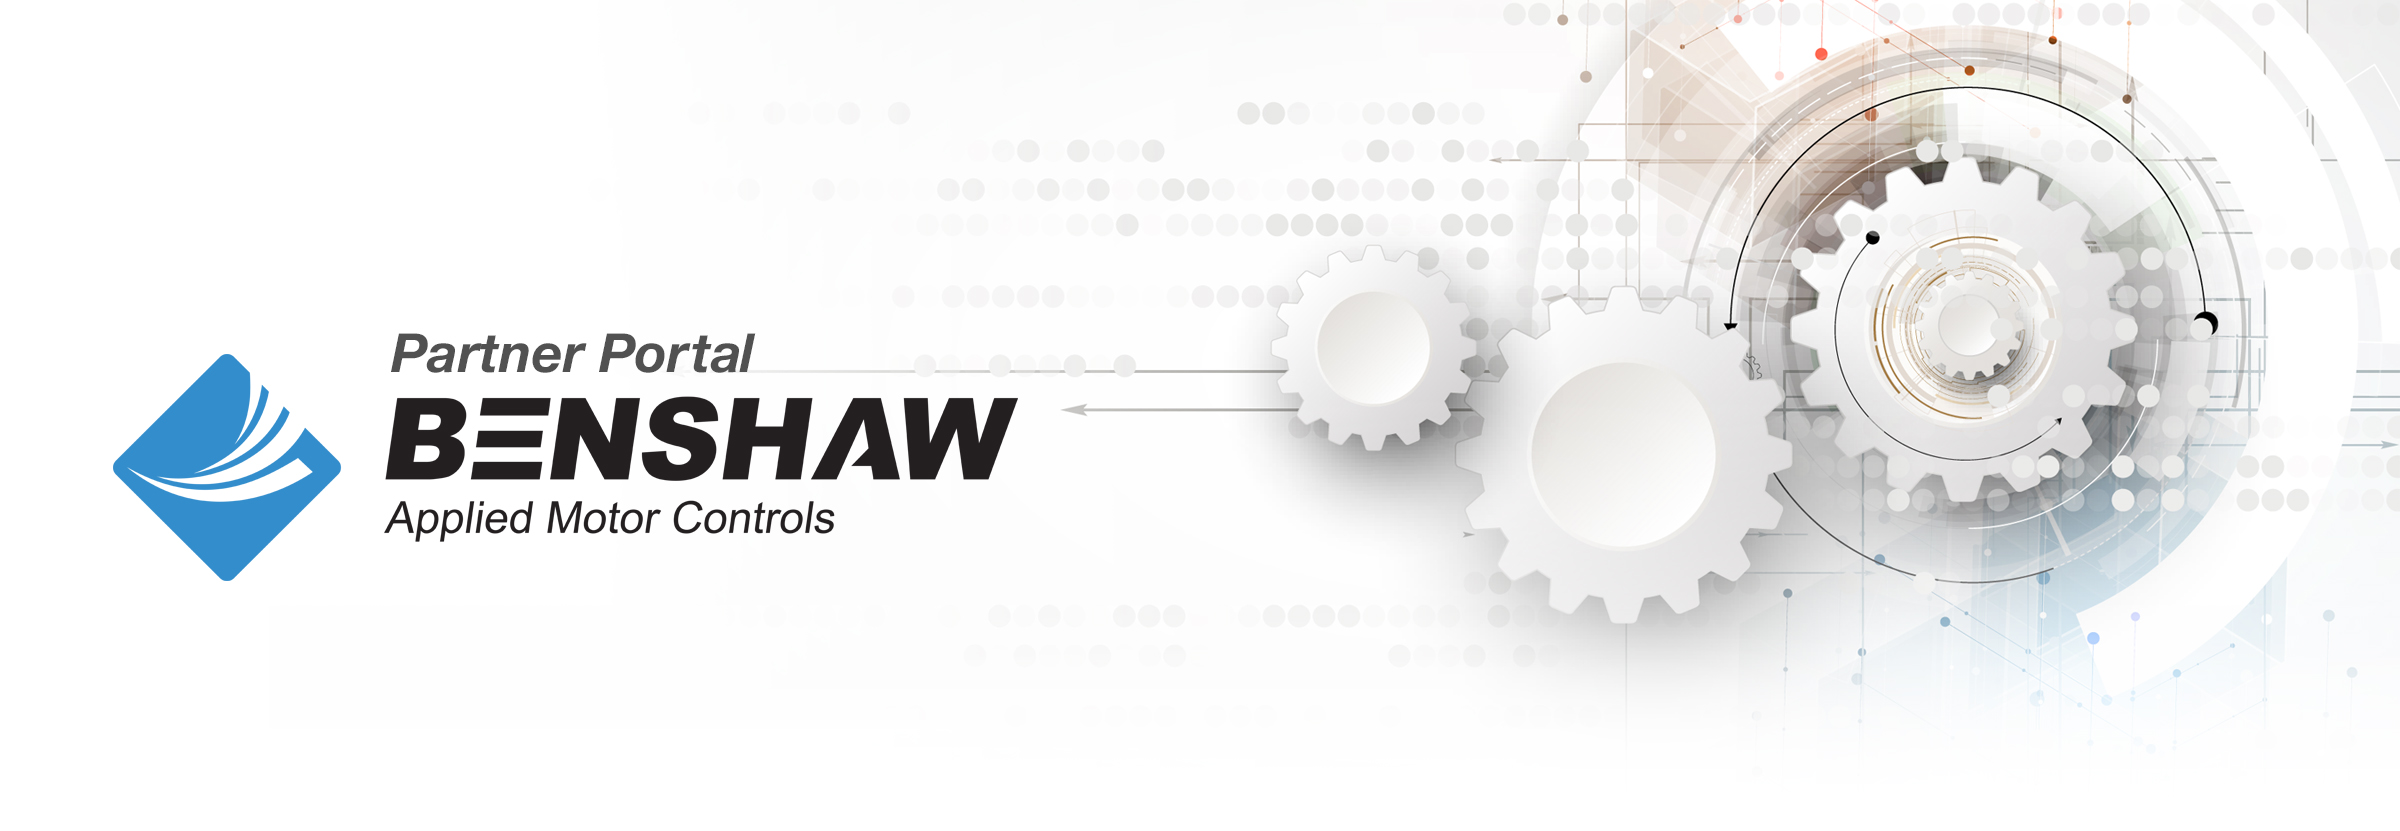 Benshaw Partner Portal